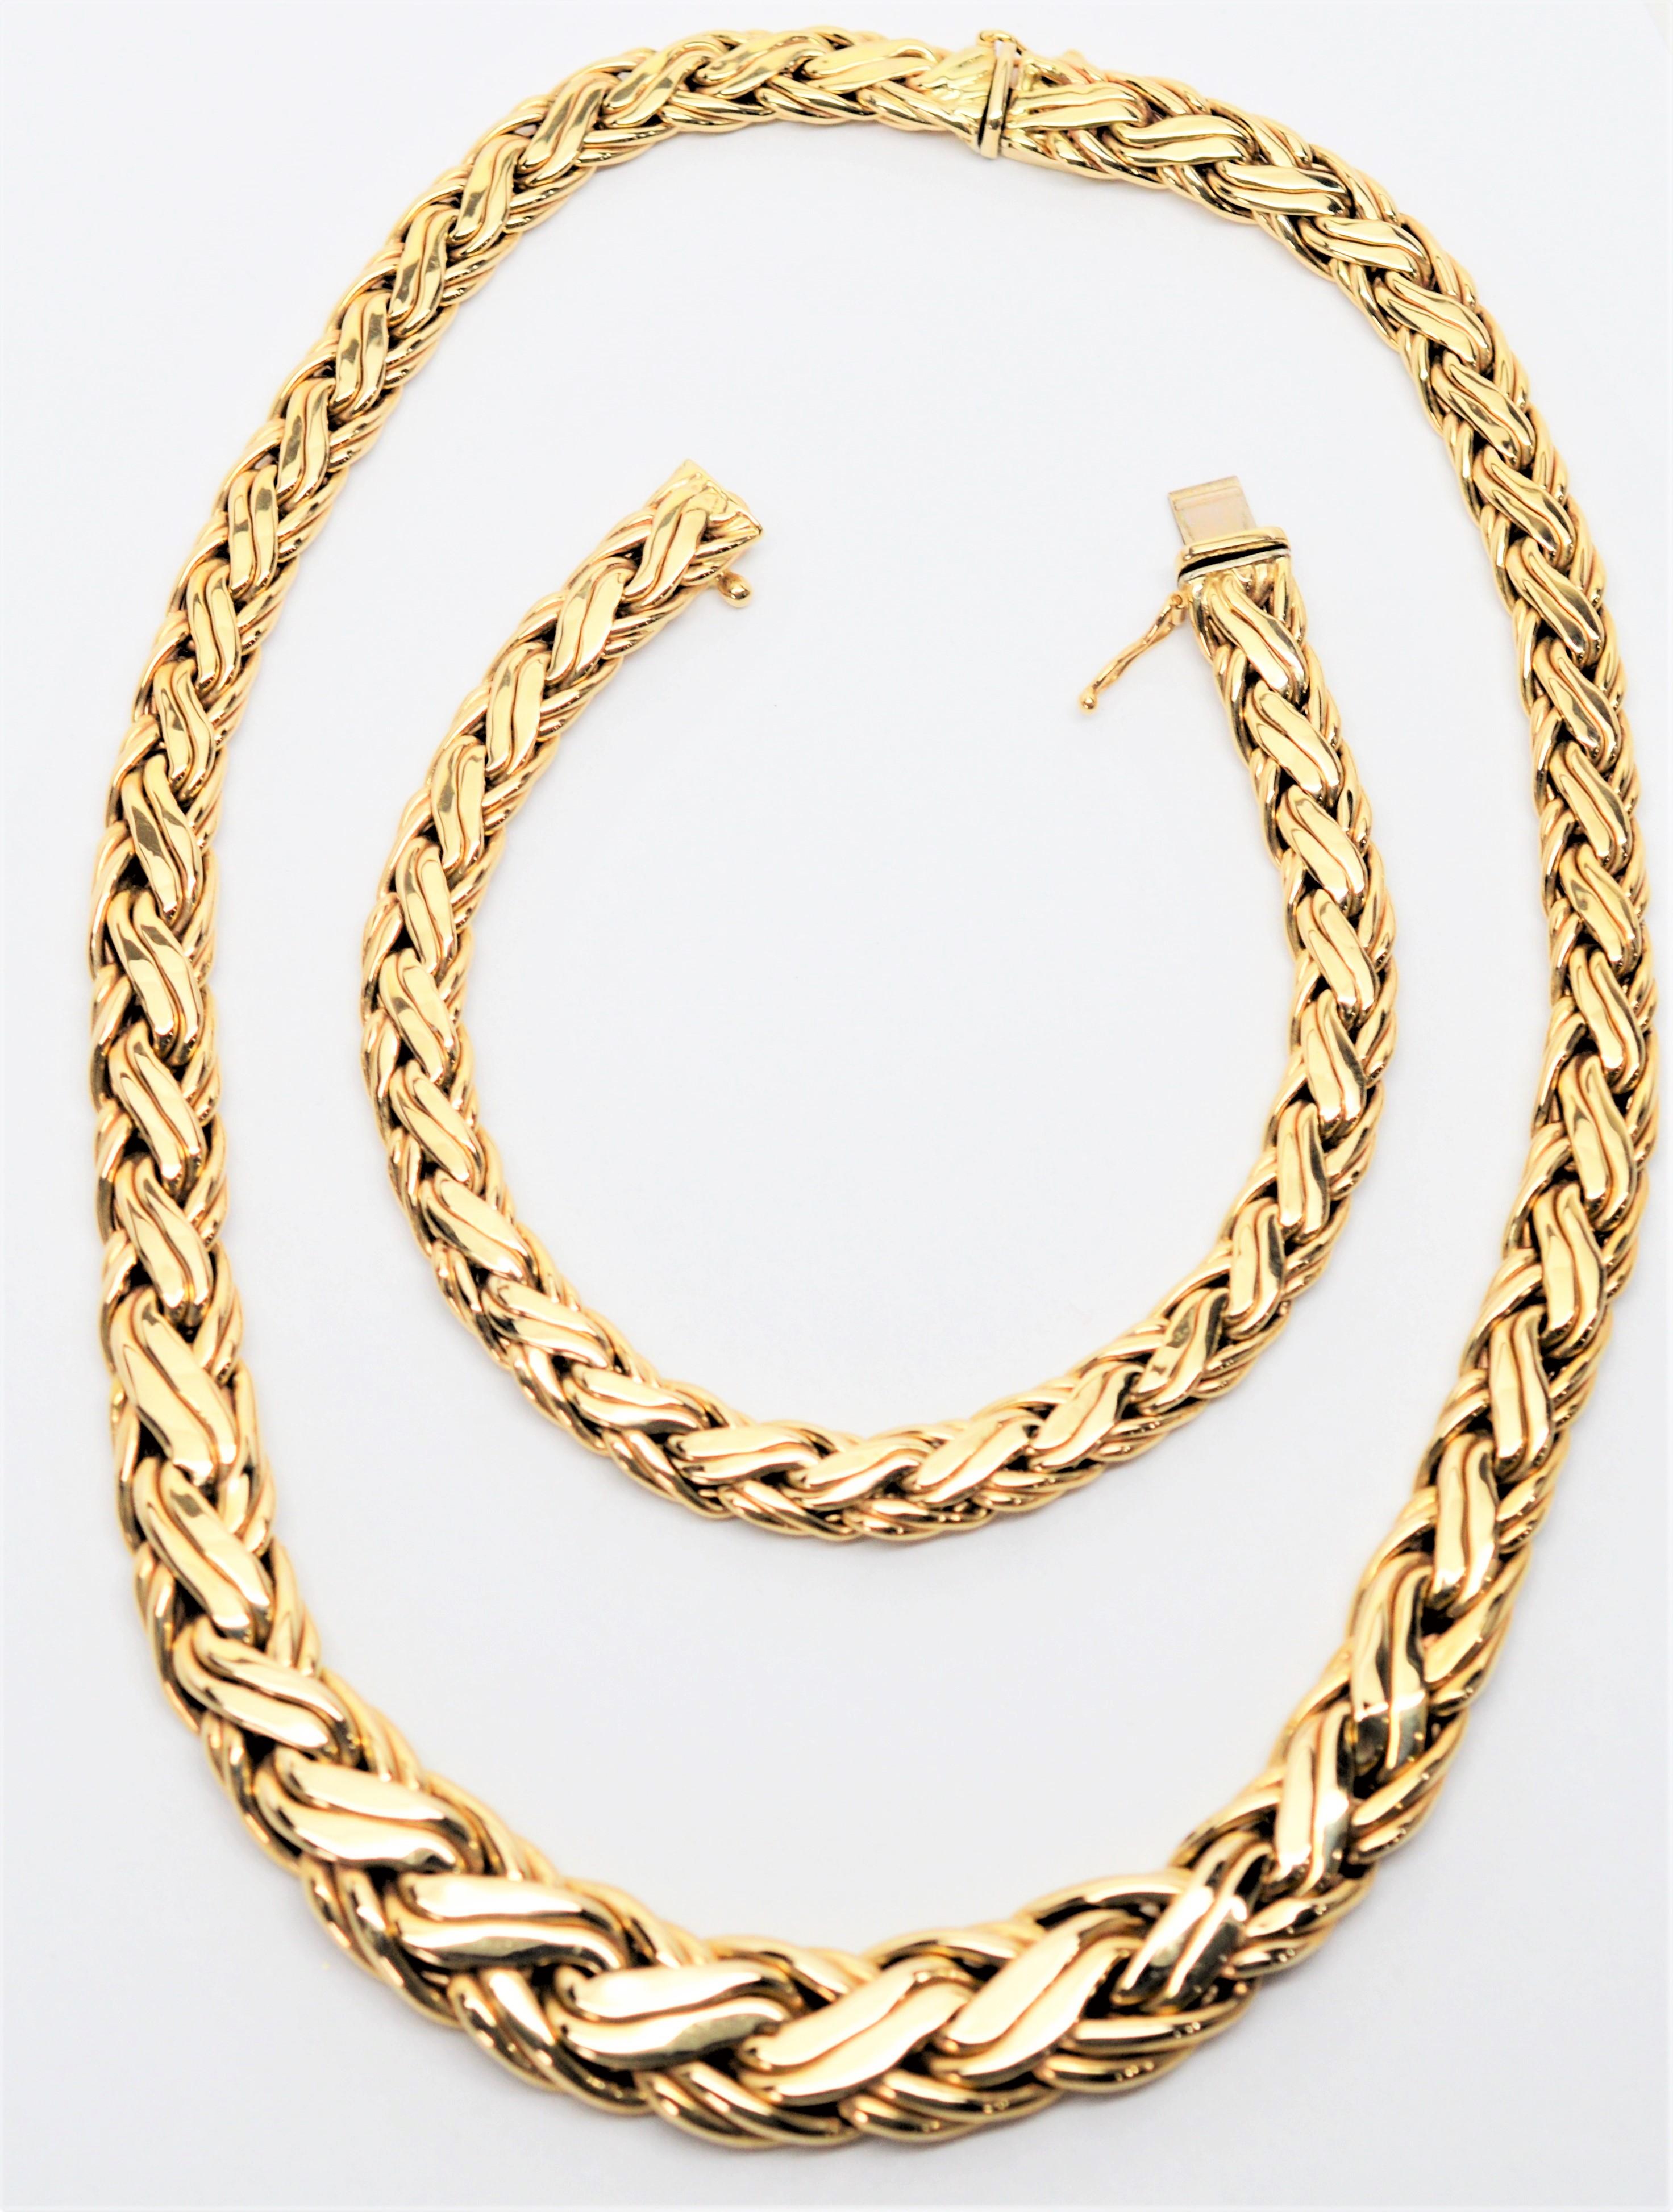 Zelman & Friedman Woven Wheat Braided 14 Karat Yellow Gold Necklace Bracelet Set 3